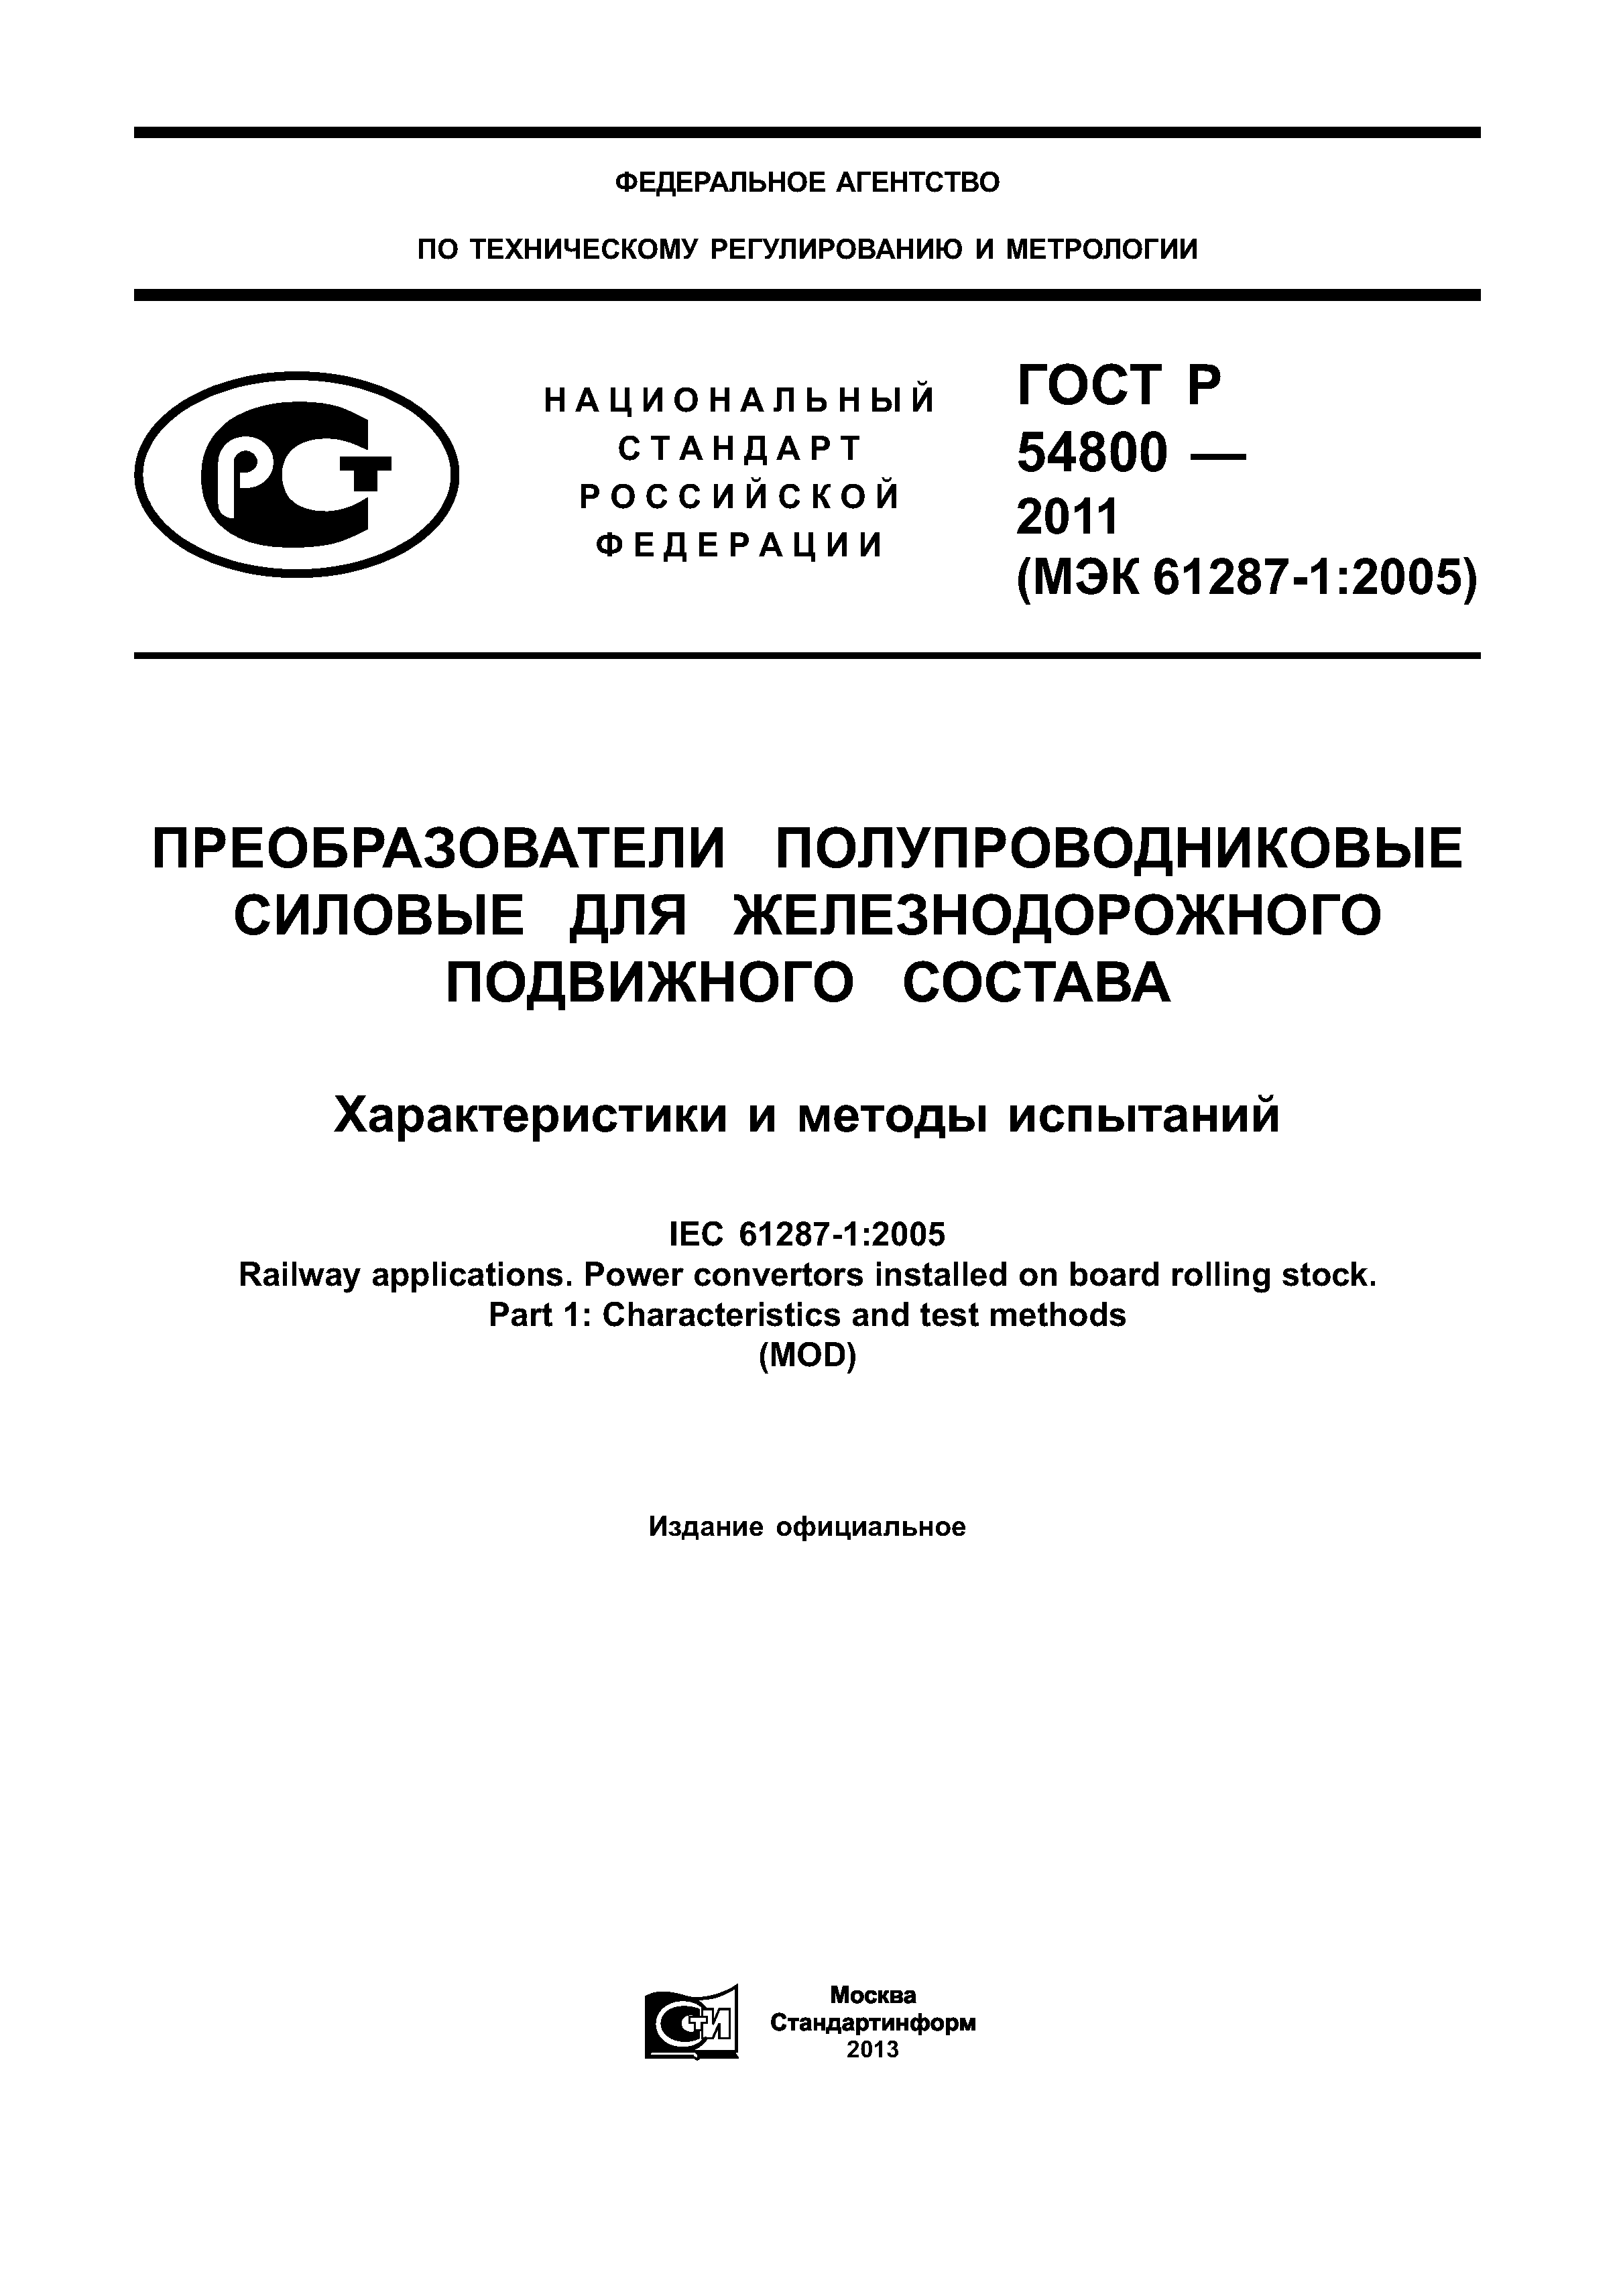 ГОСТ Р 54800-2011